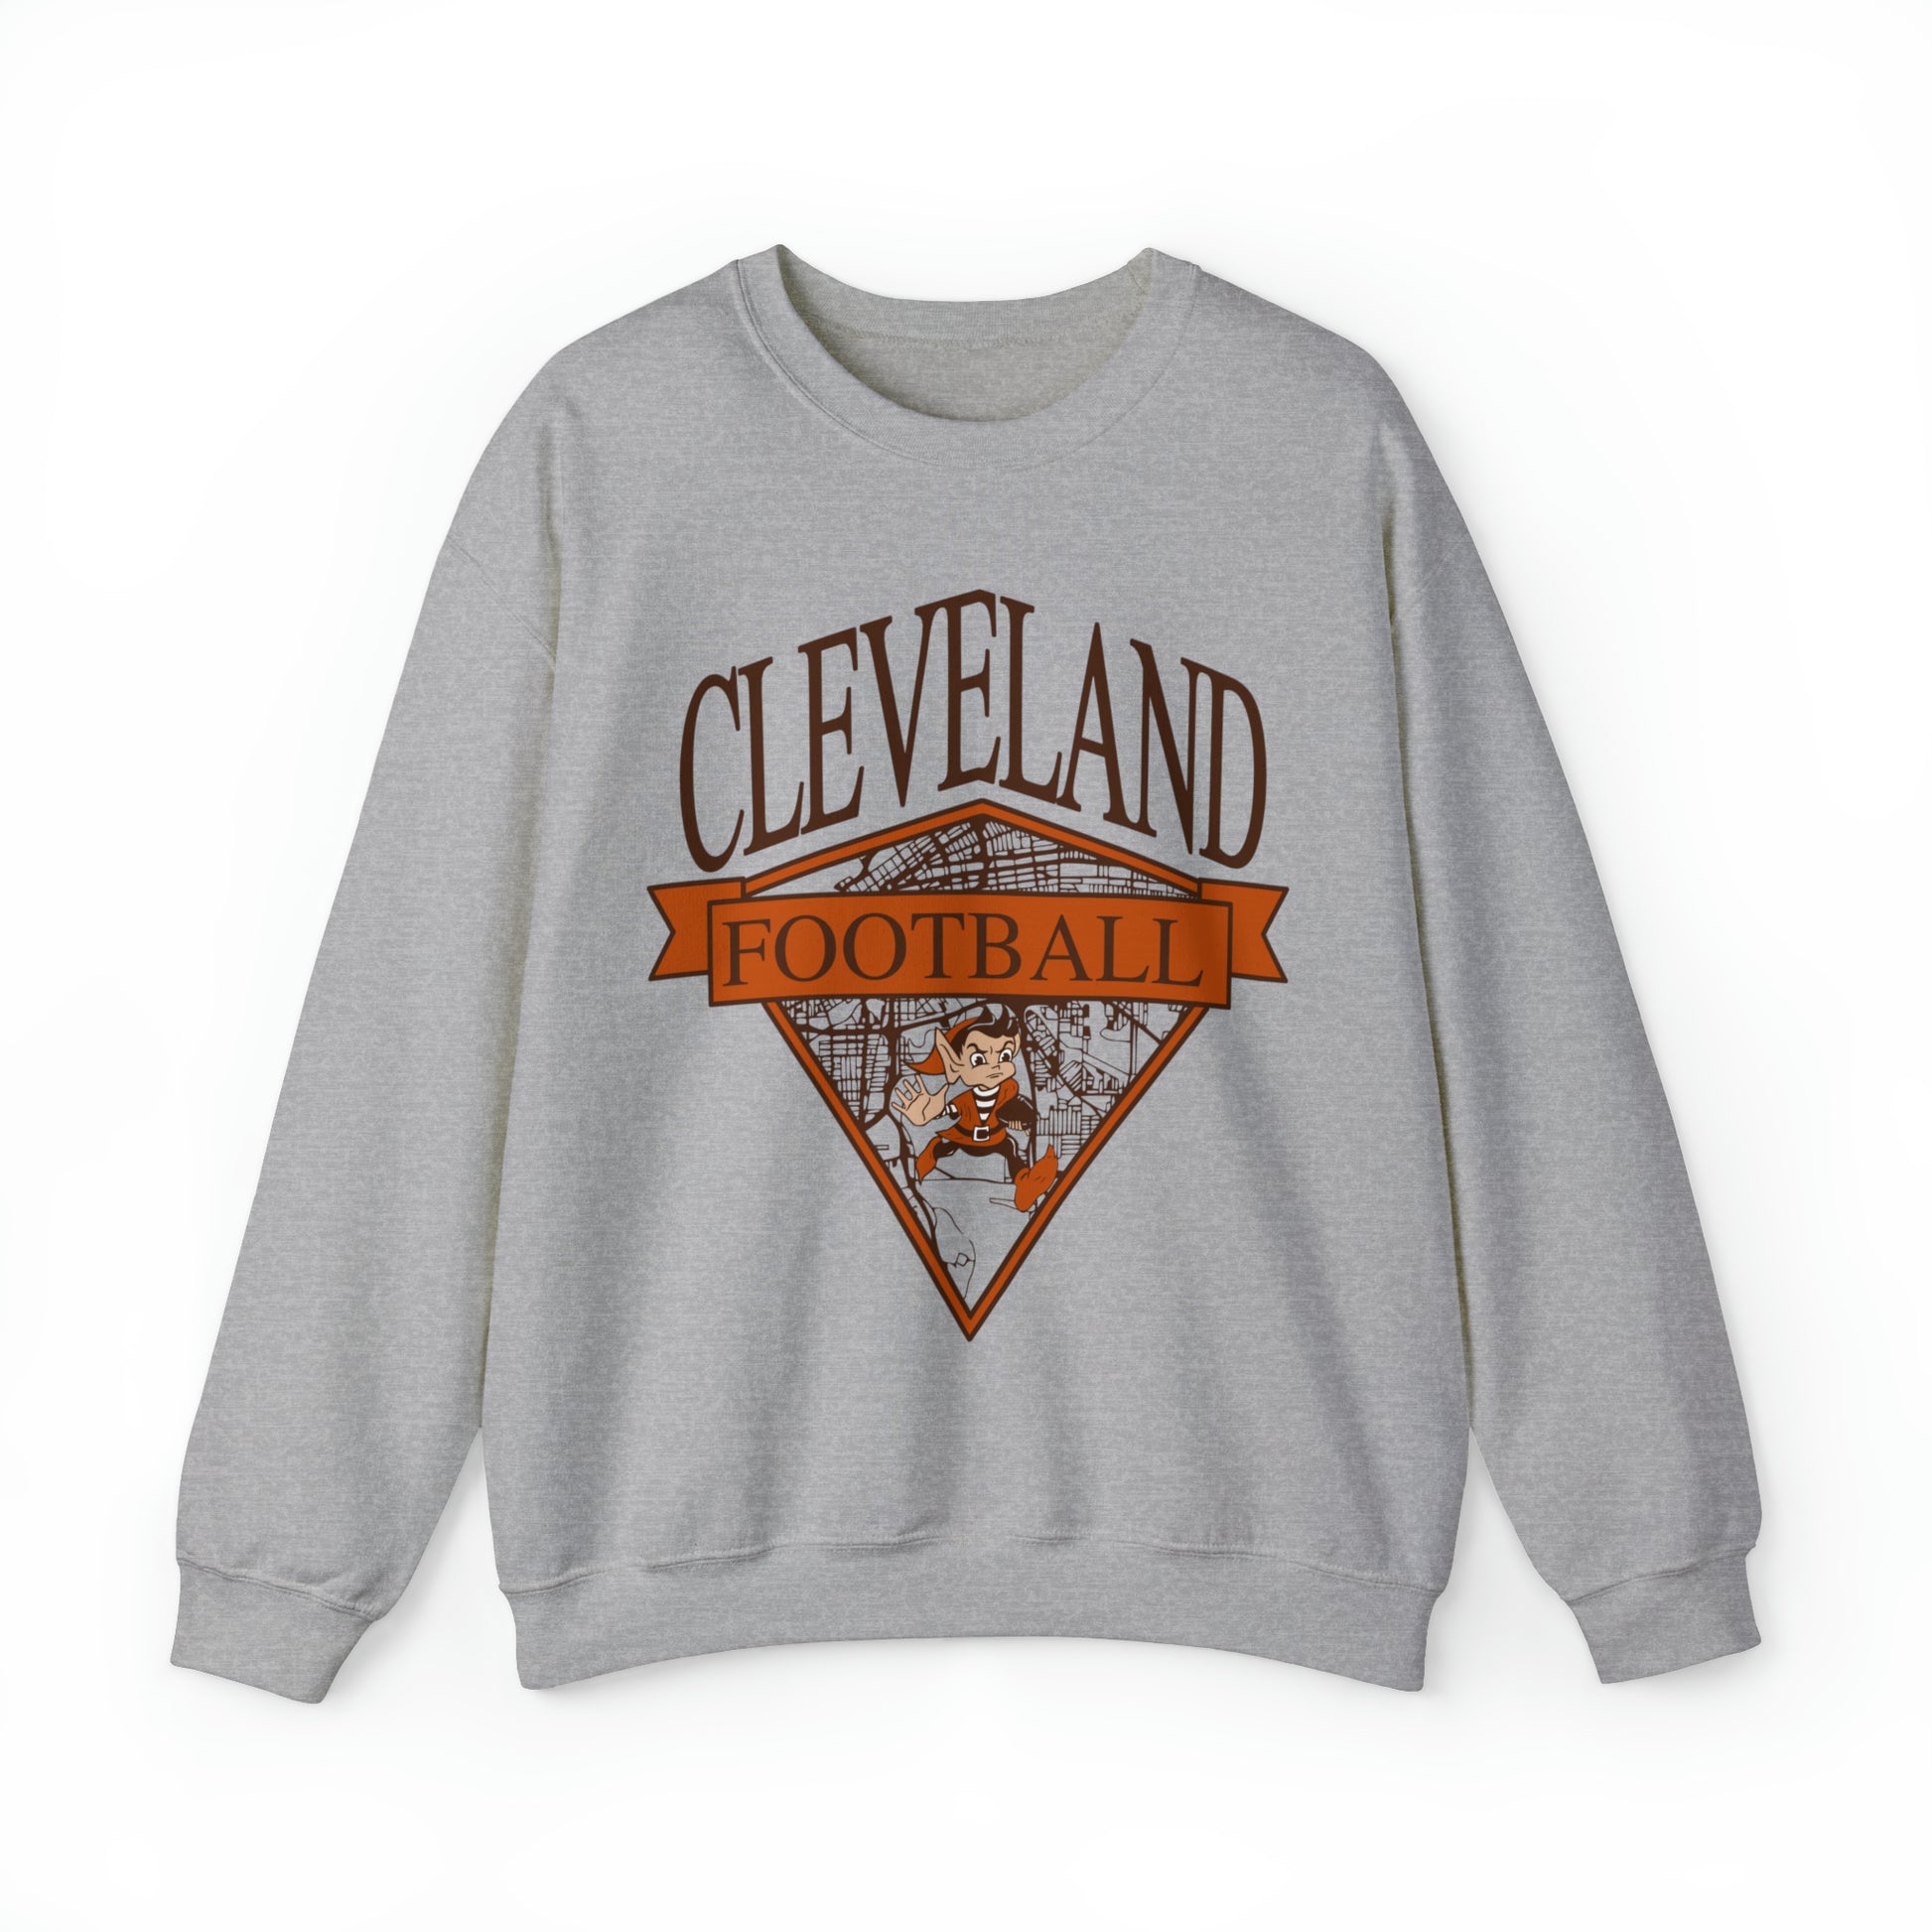 Vintage Cleveland Browns Sweatshirt - 90's NFL Football Map of Cleveland Browns Crewneck - NFL Football Sweatshirt